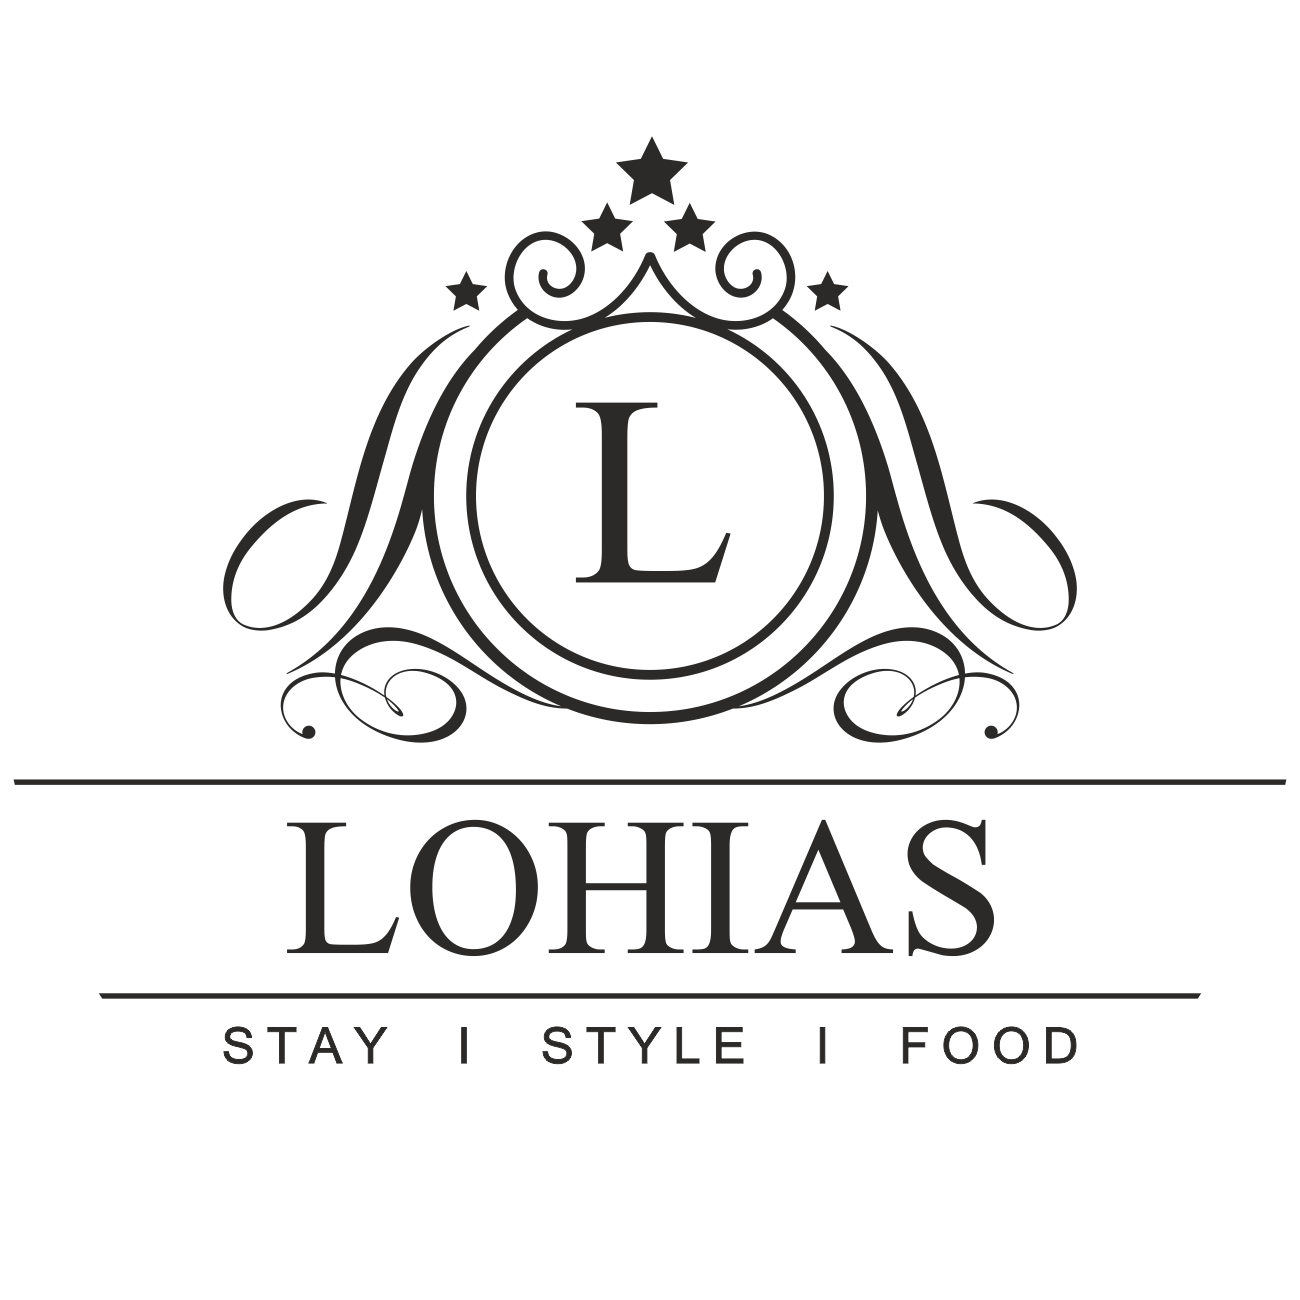 Resort The Lohias